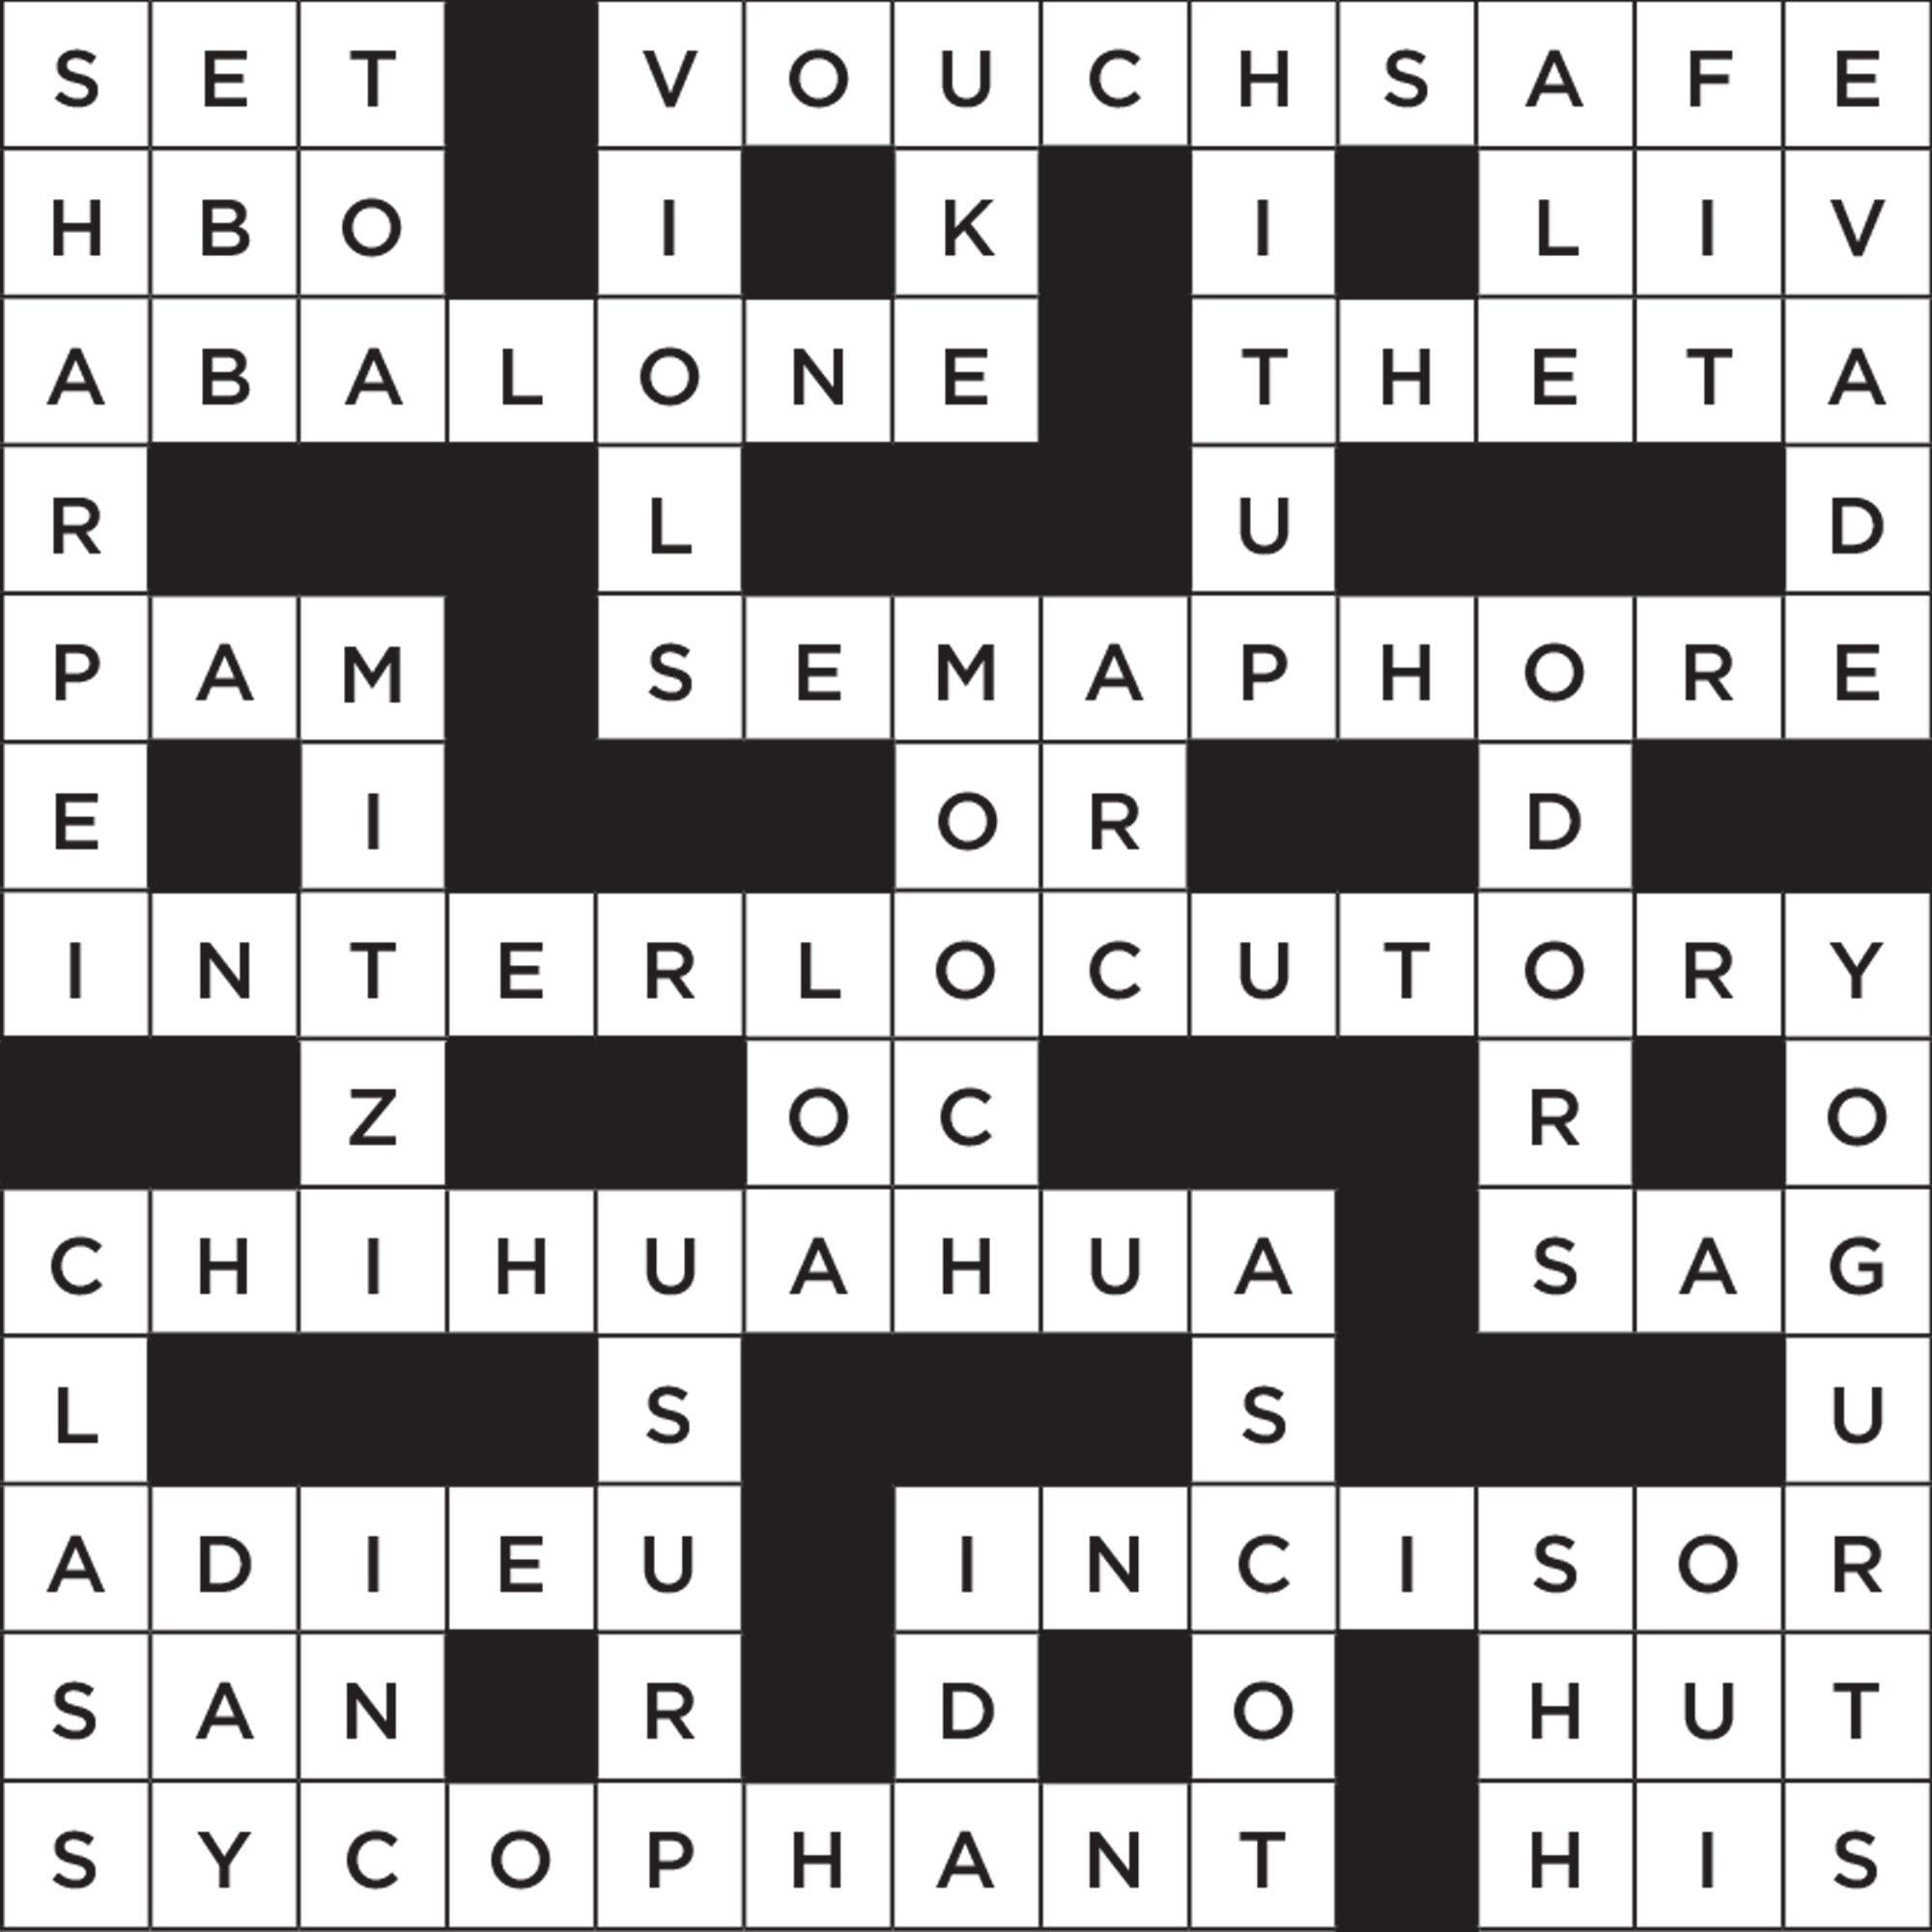 easy crossword puzzles for seniors activity shelter free crosswords